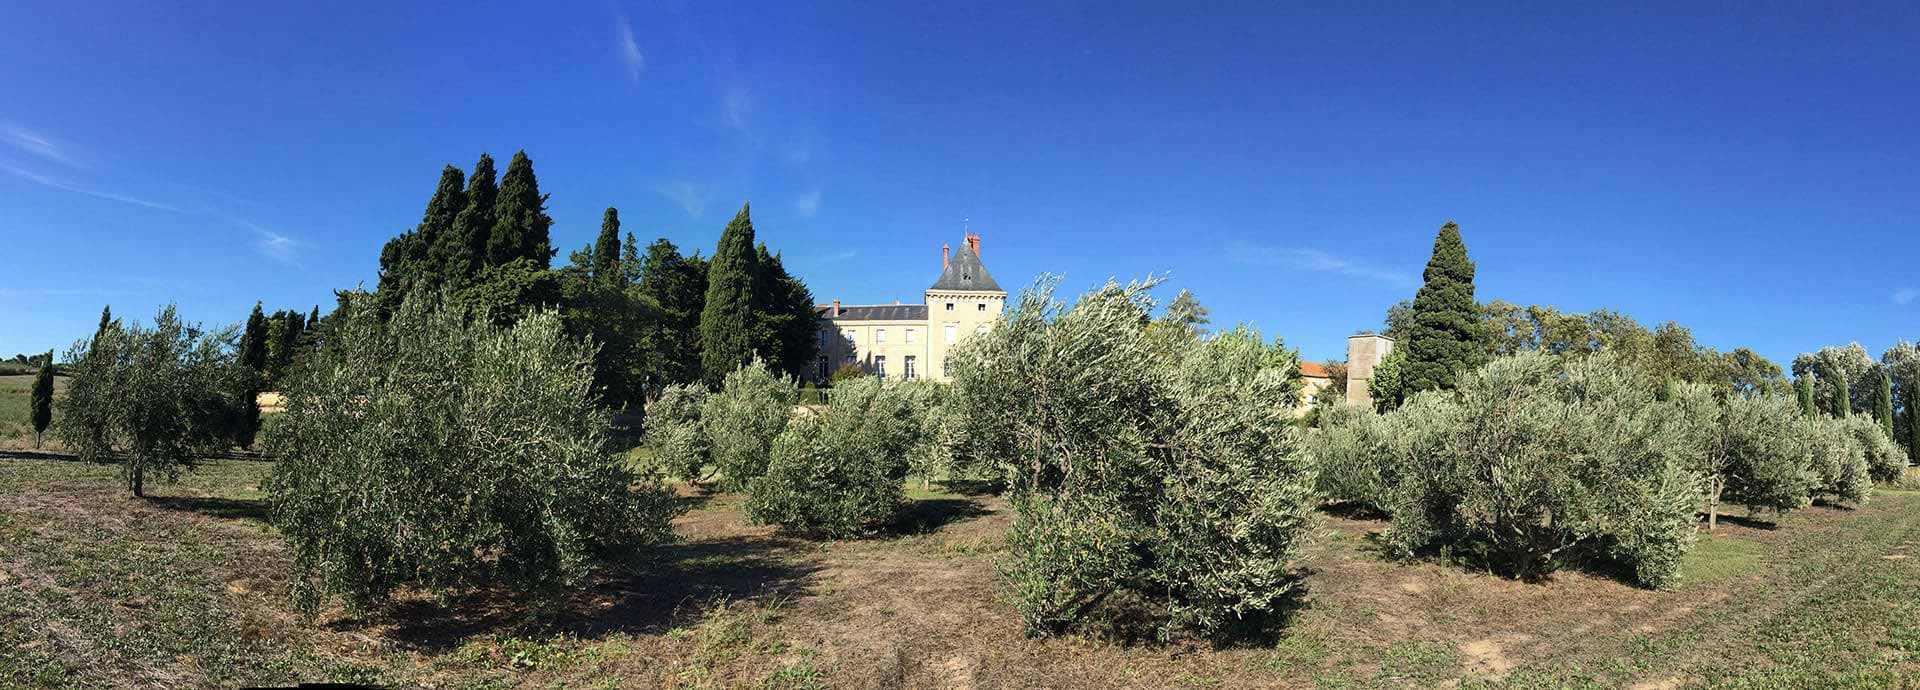 Explore the biological diversity of the 120 hectares (300 acres) of Domaine de la Vernède, holiday rental near Béziers